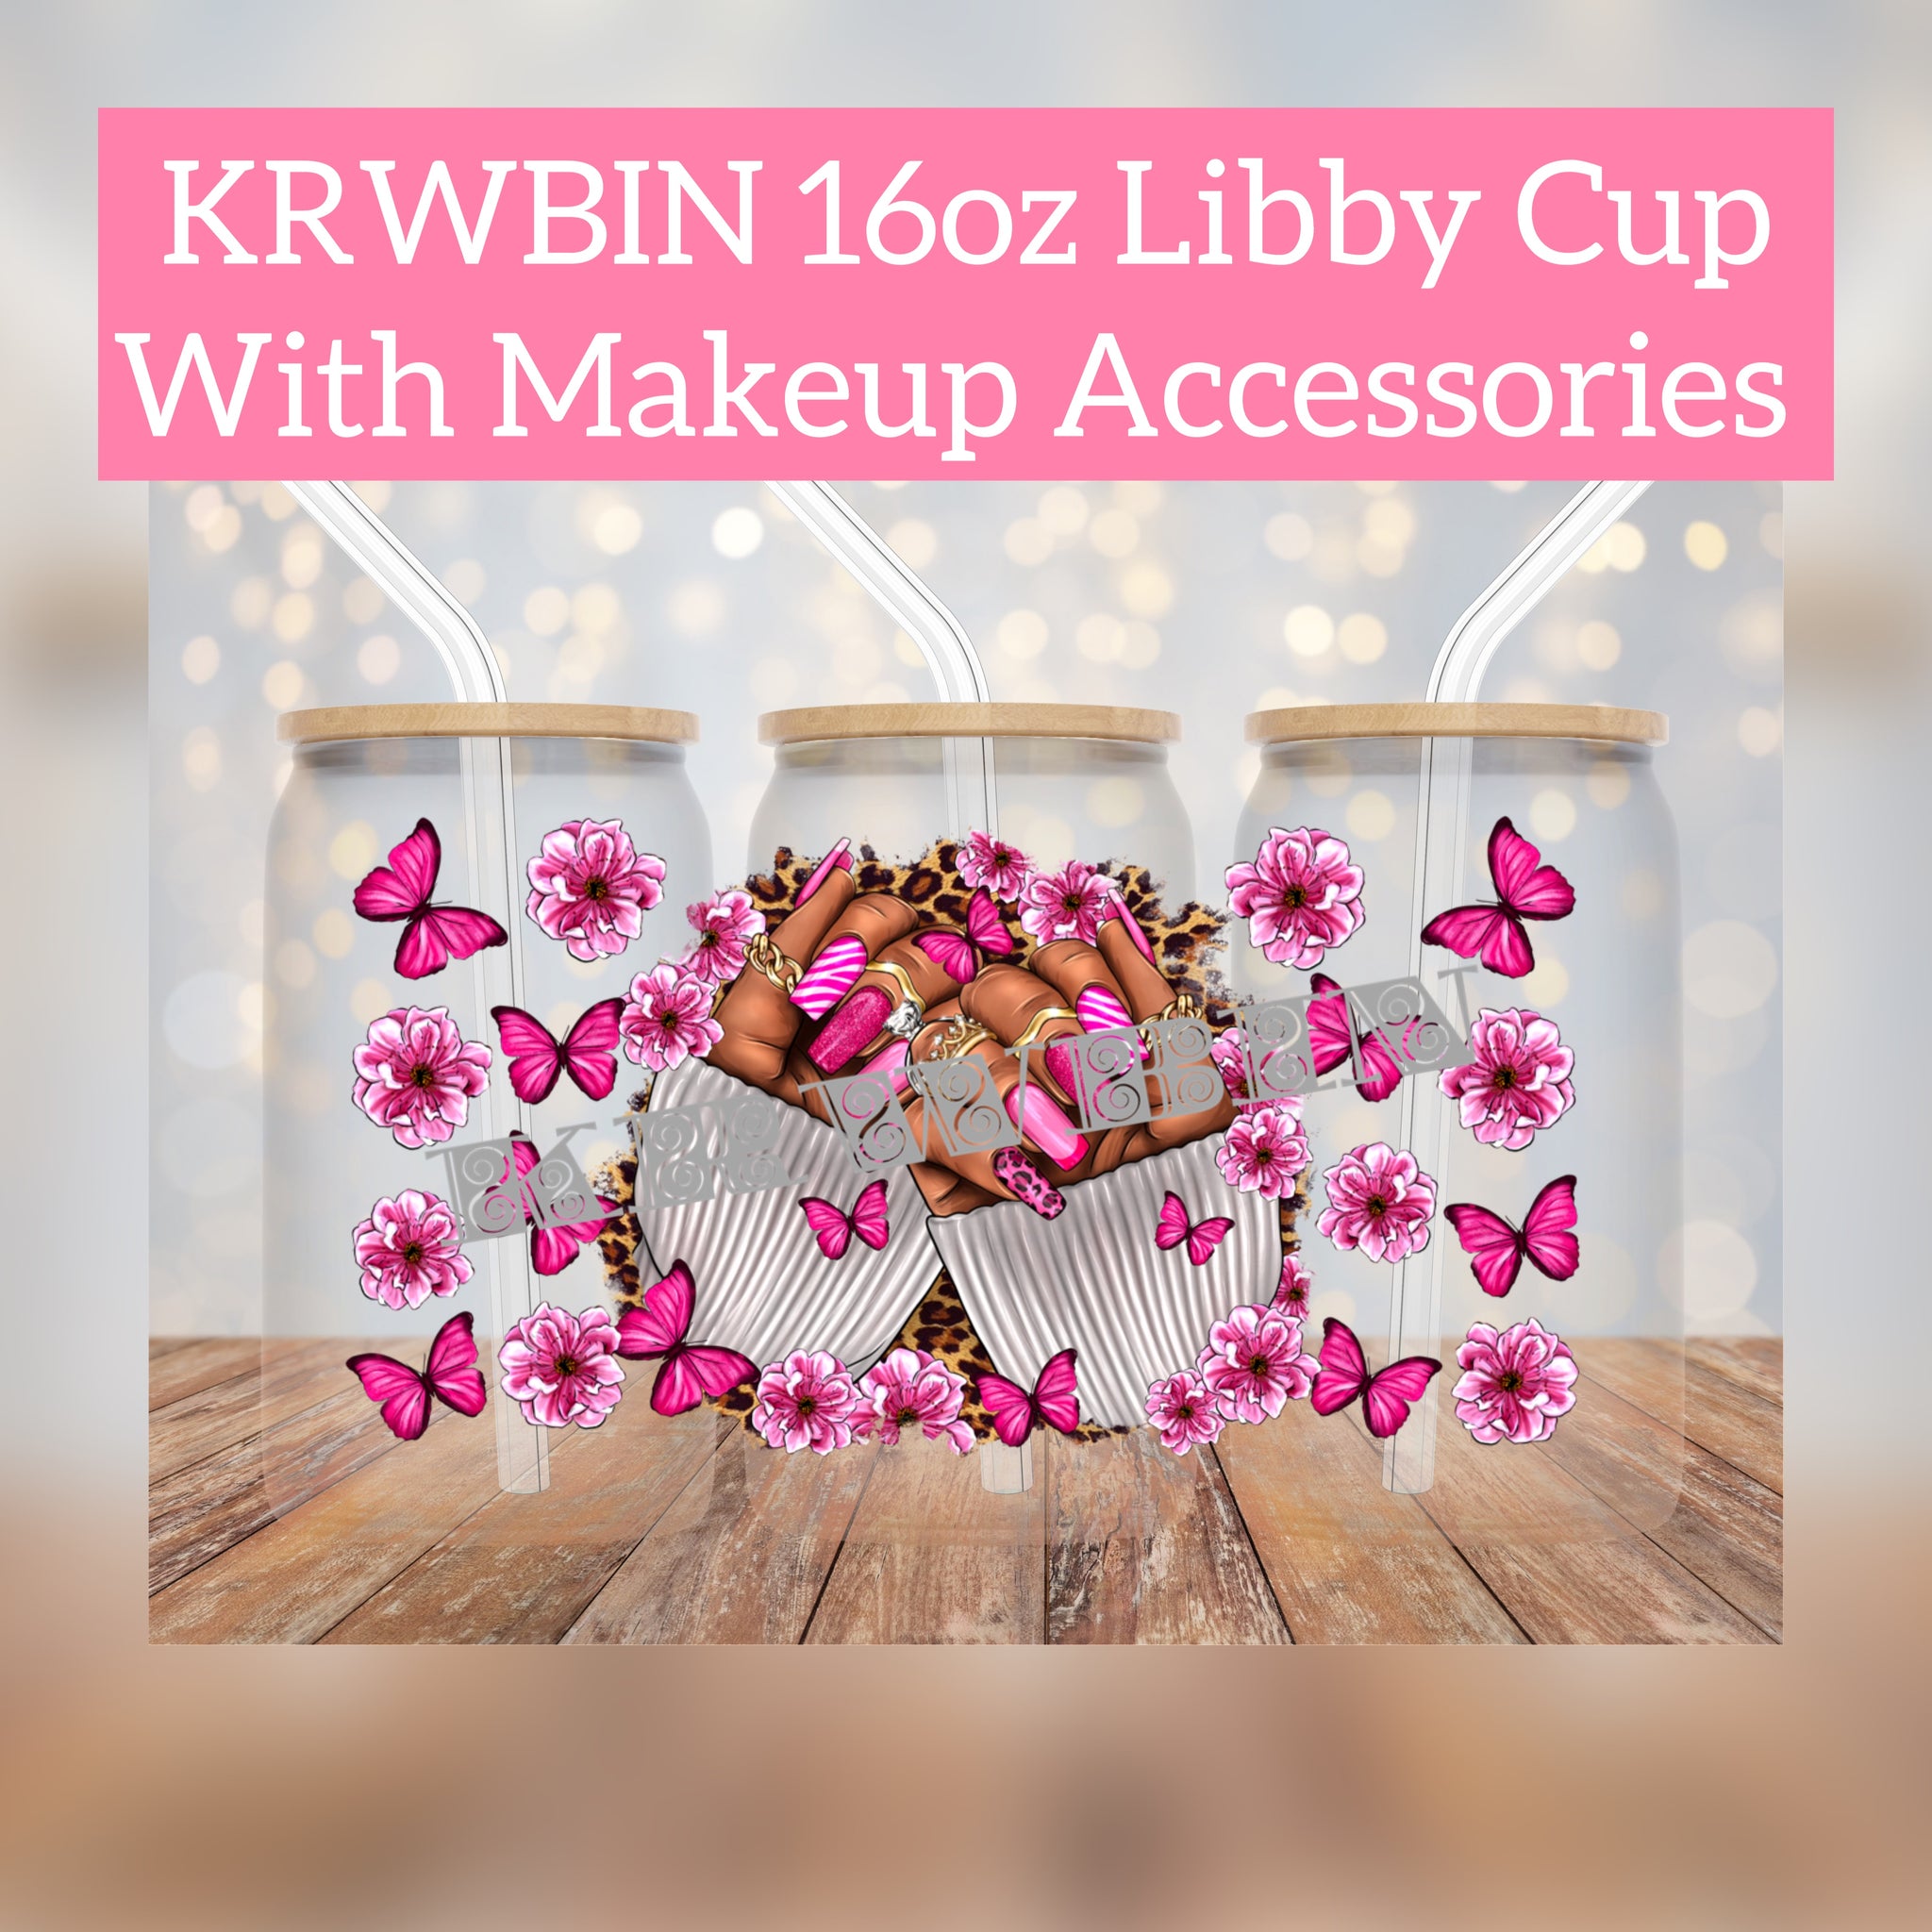 KRWBIN Beauty Libby Glass (Option w/ Makeup Accessories)